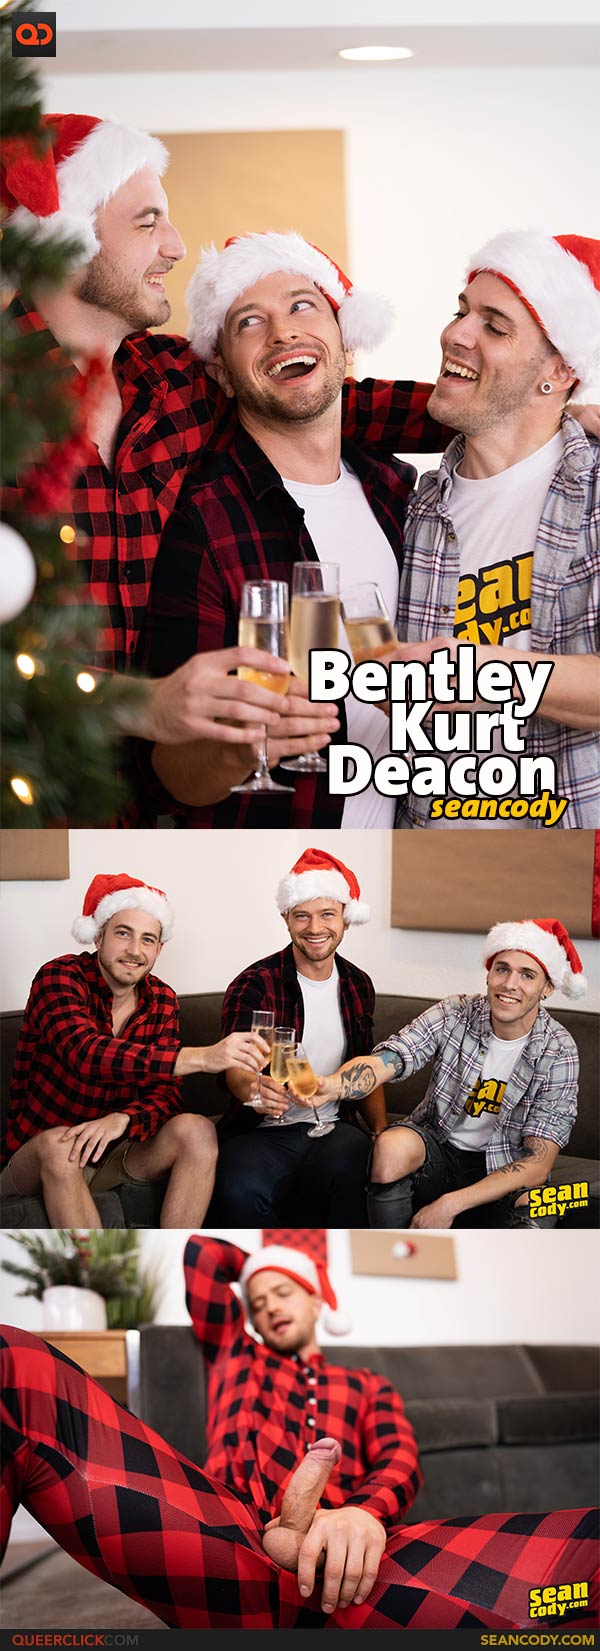 Sean Cody: Bentley, Kurt and Deacon